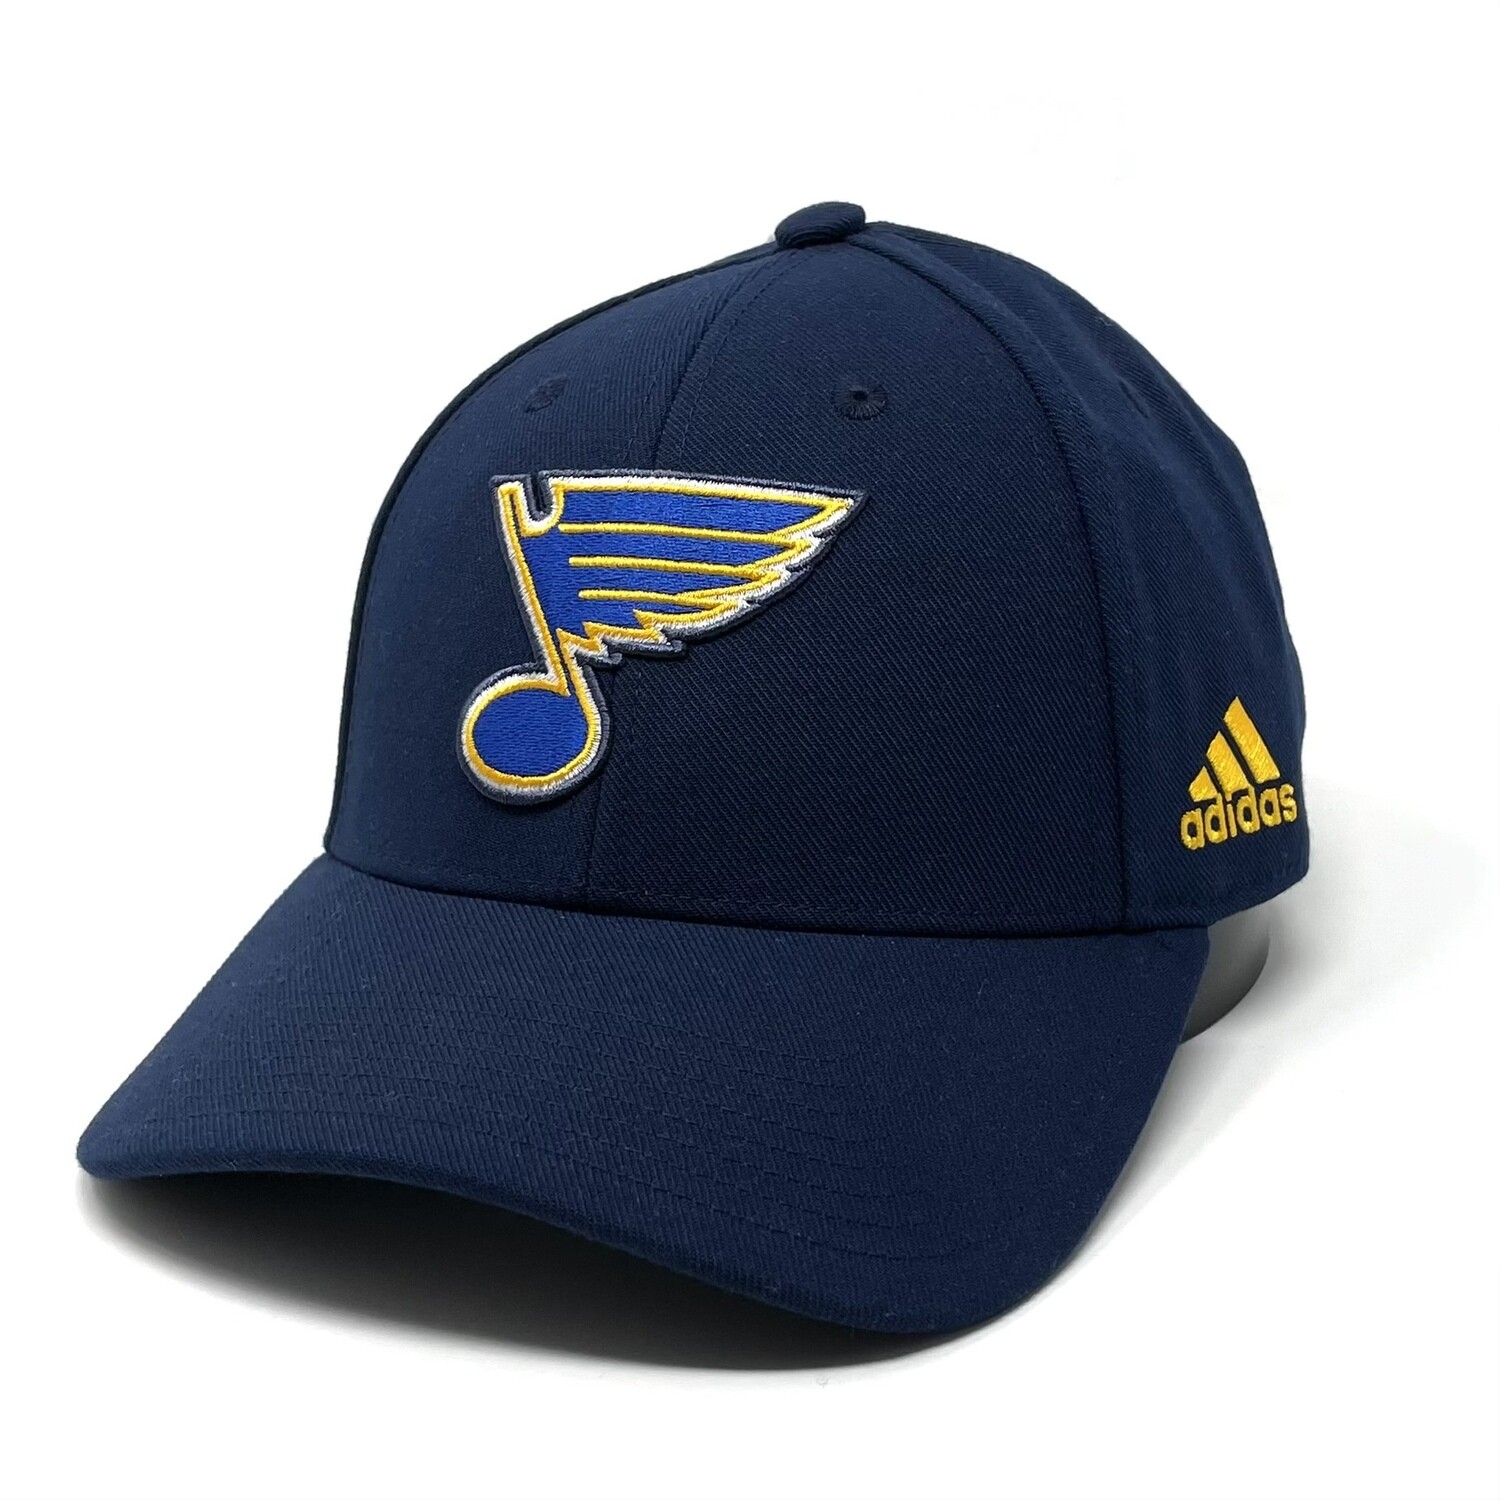 St. Louis Blues Men's Adidas Strapback Adjustable Hat